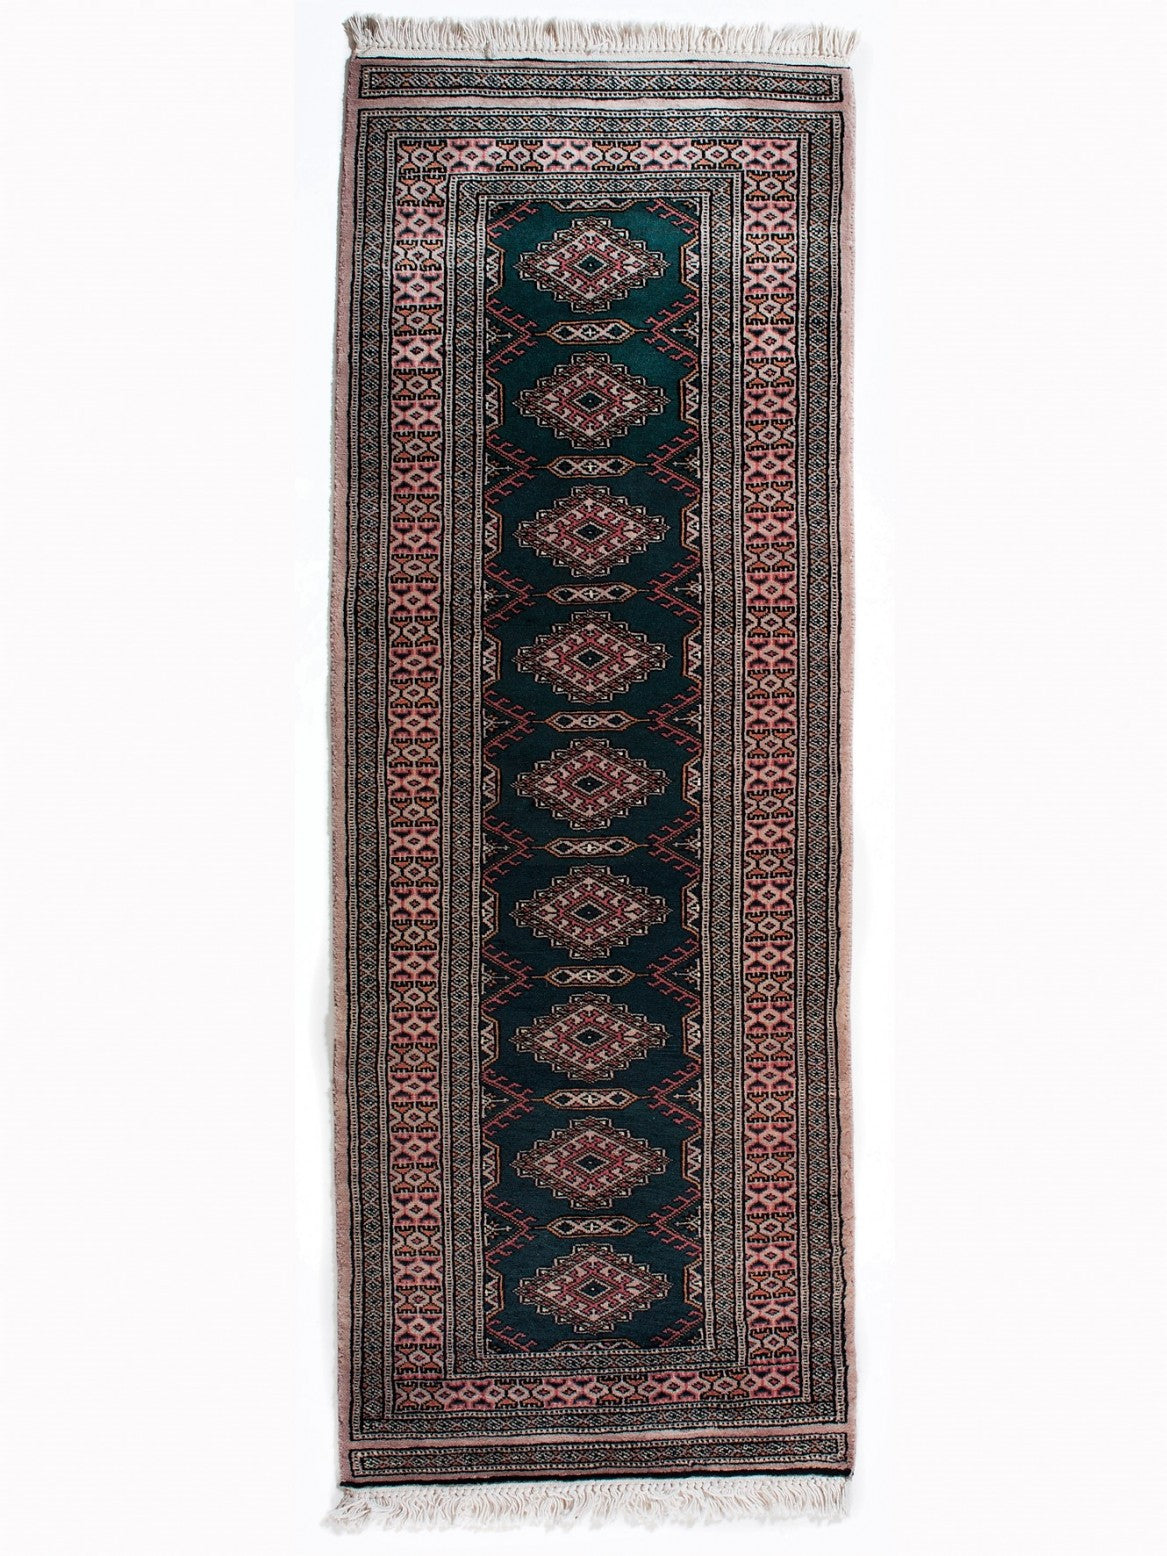 PAKISTAN KARACHI 175 x 61 cm